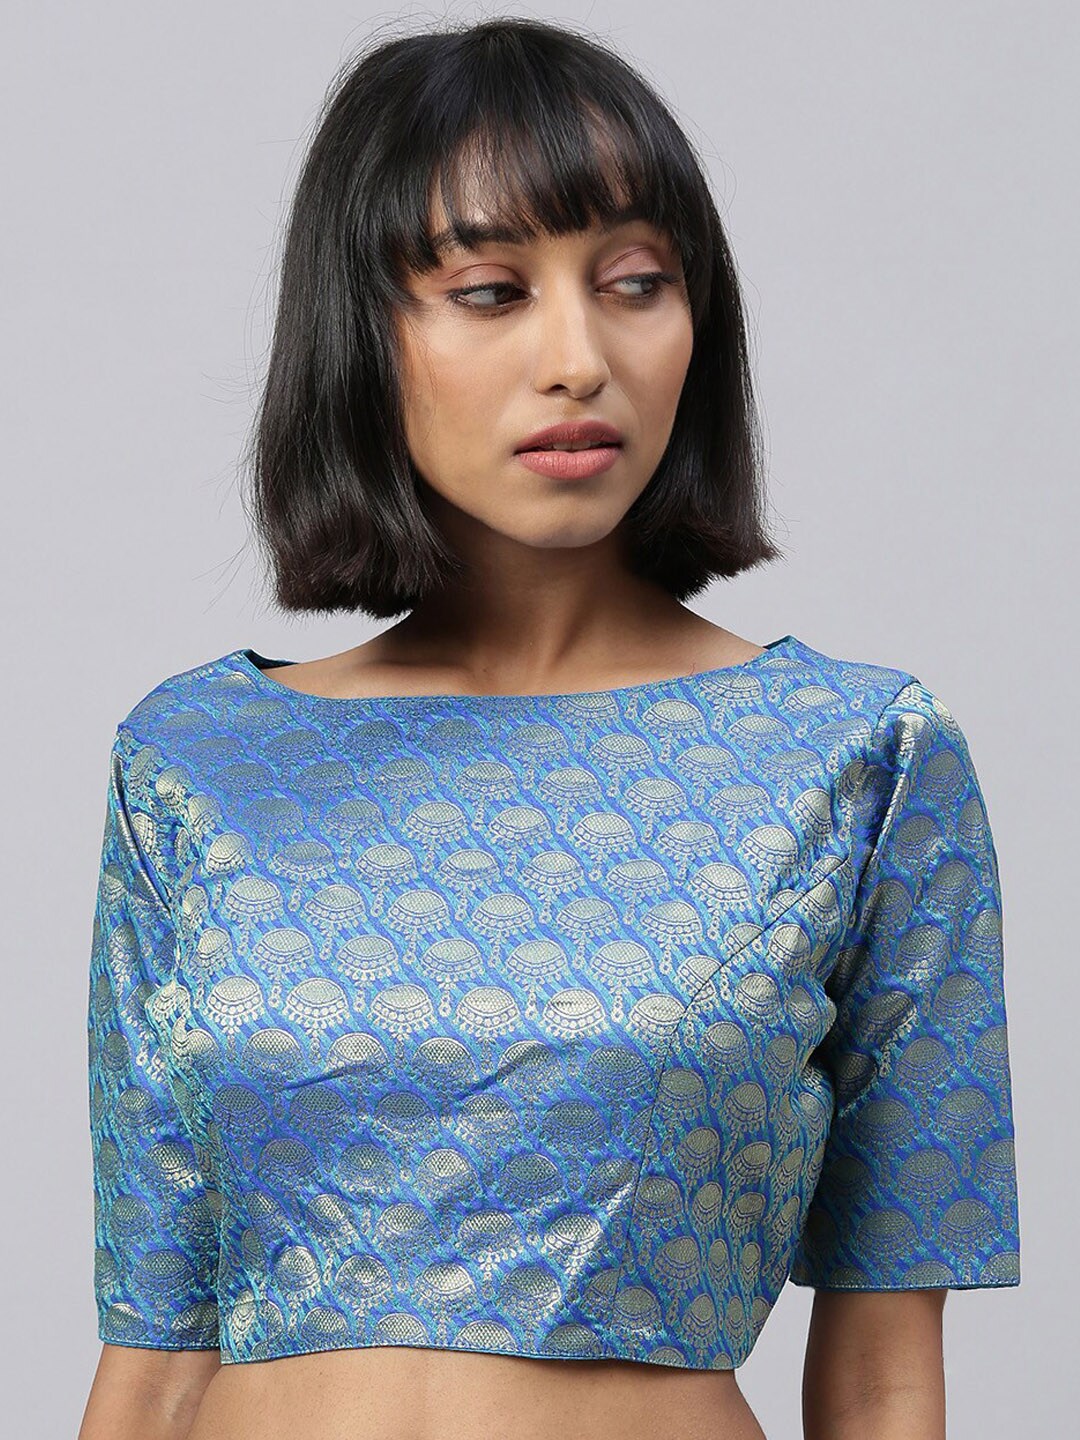 Amrutam Fab Women Blue & Gold-Toned Woven Design Jacquard Saree Blouse Price in India